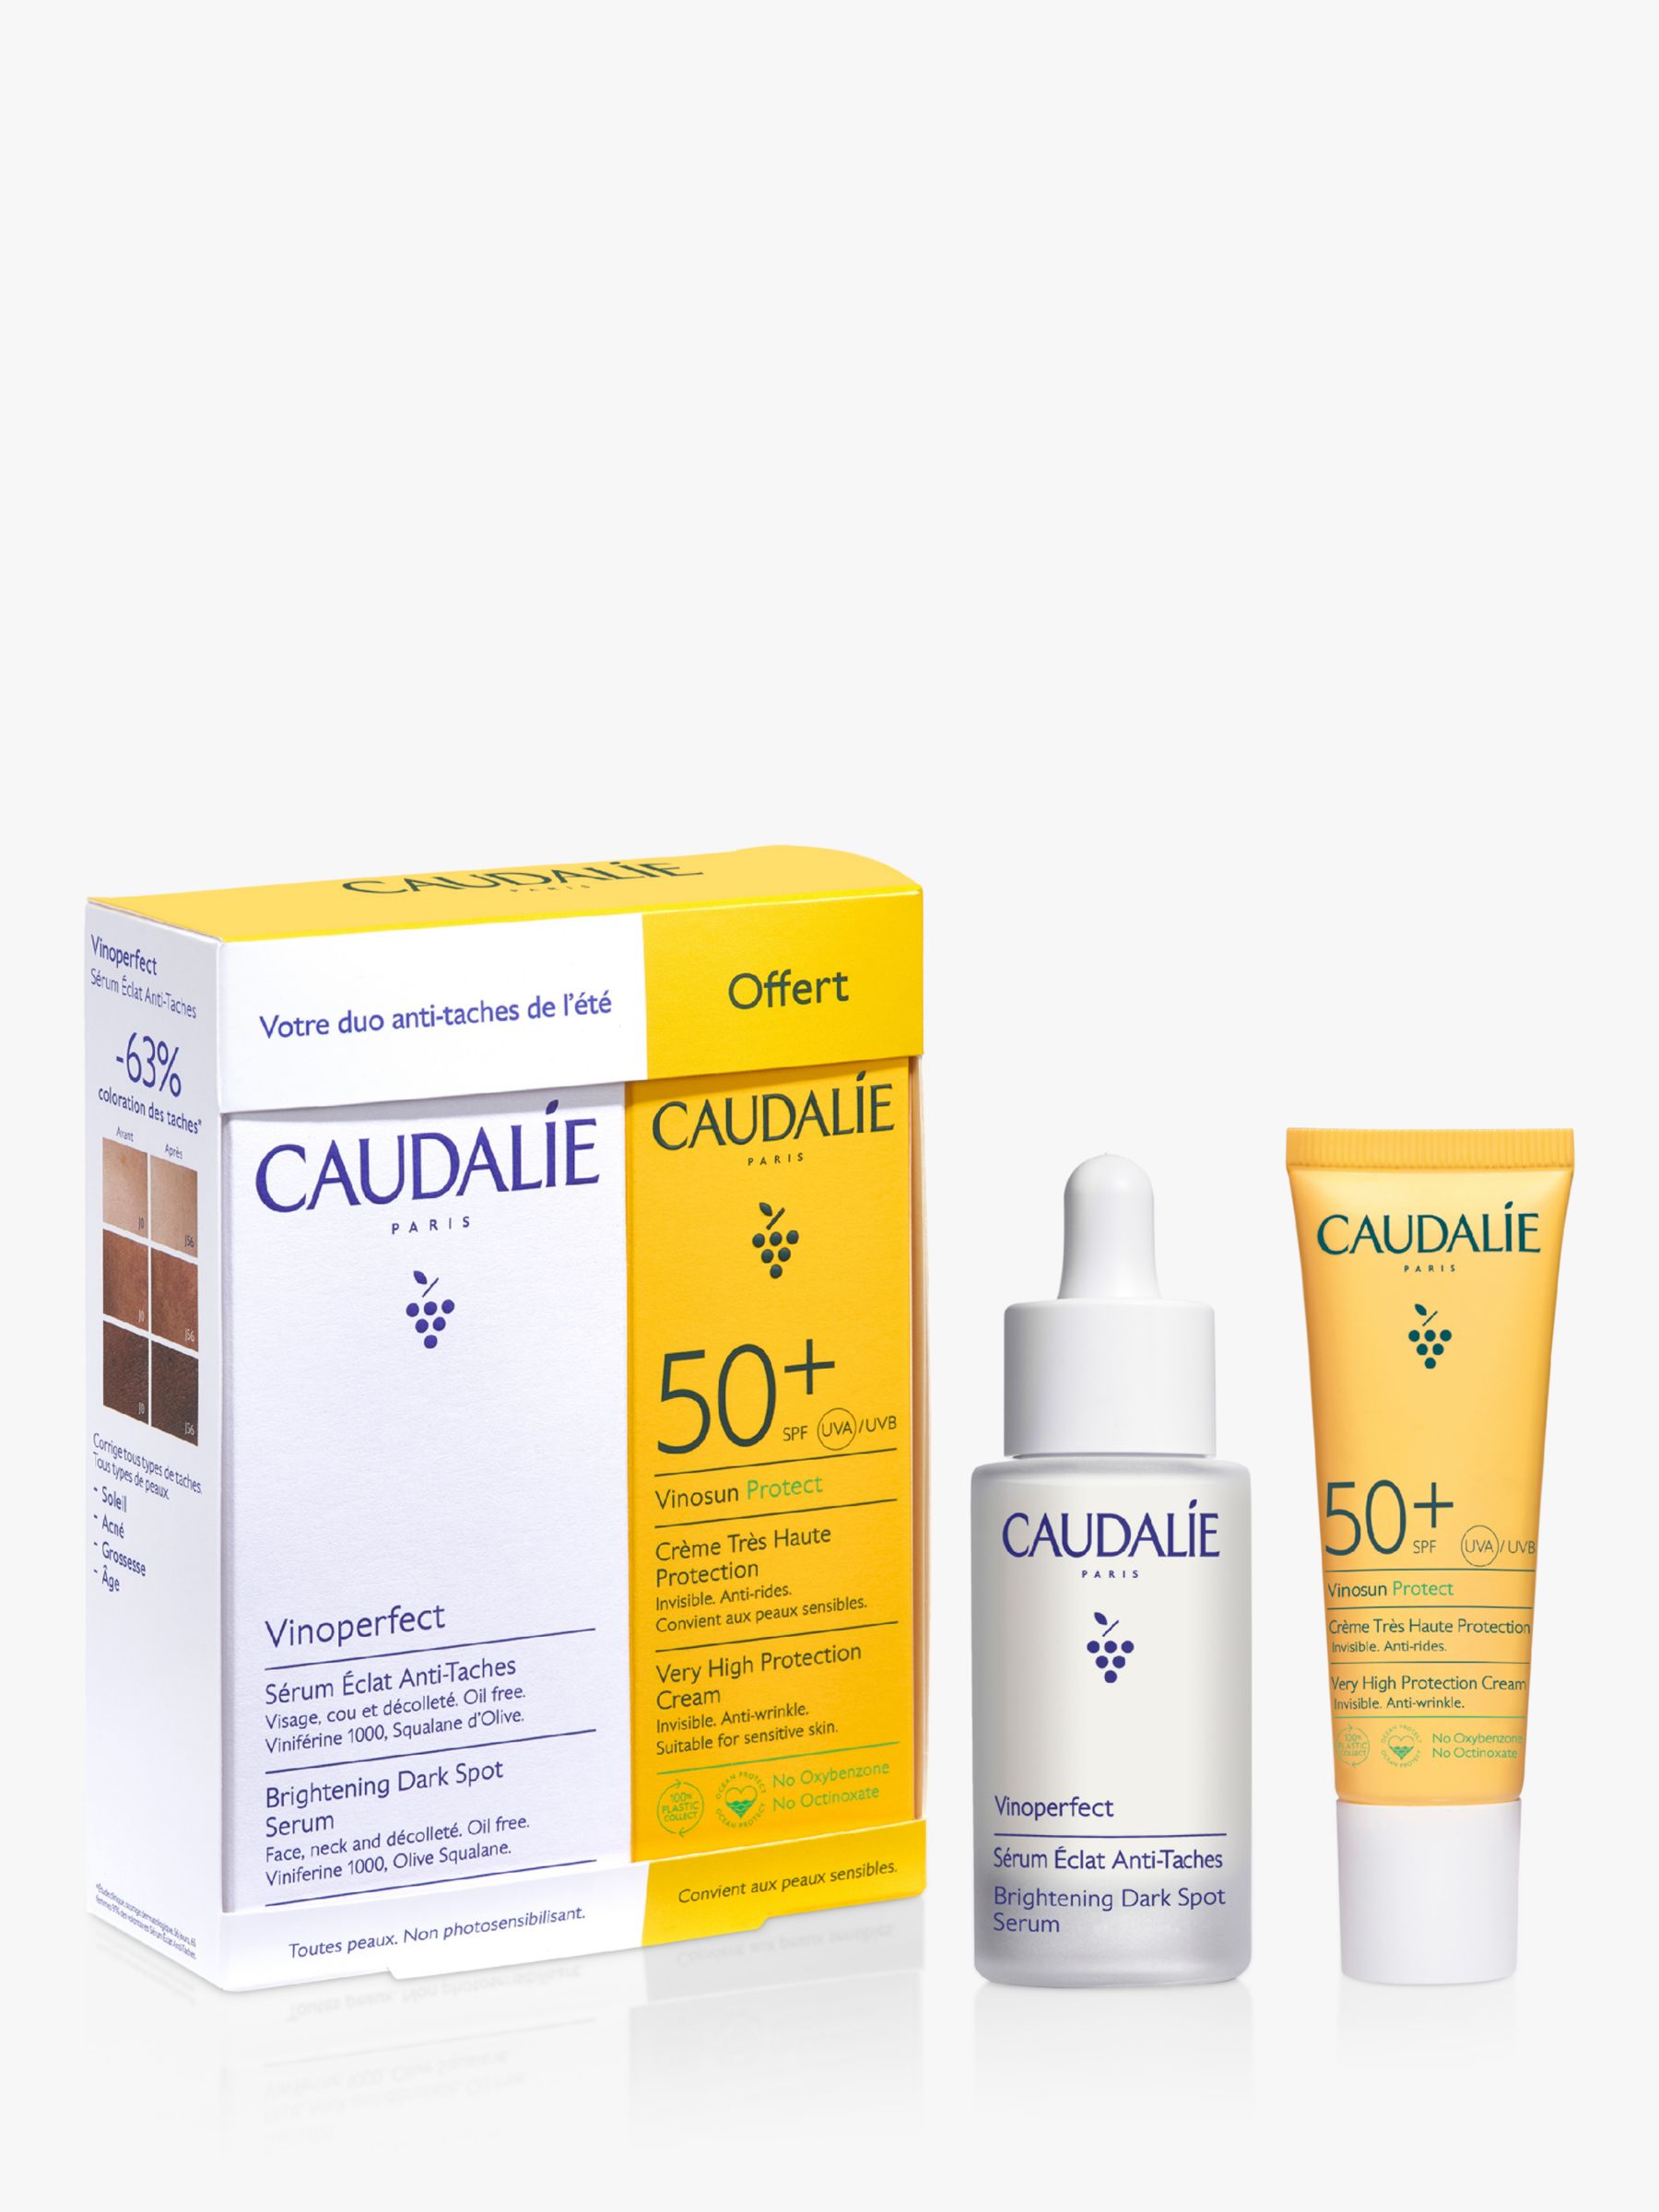 Caudalie Vinoperfect Serum and Suncare Skincare Gift Set 1